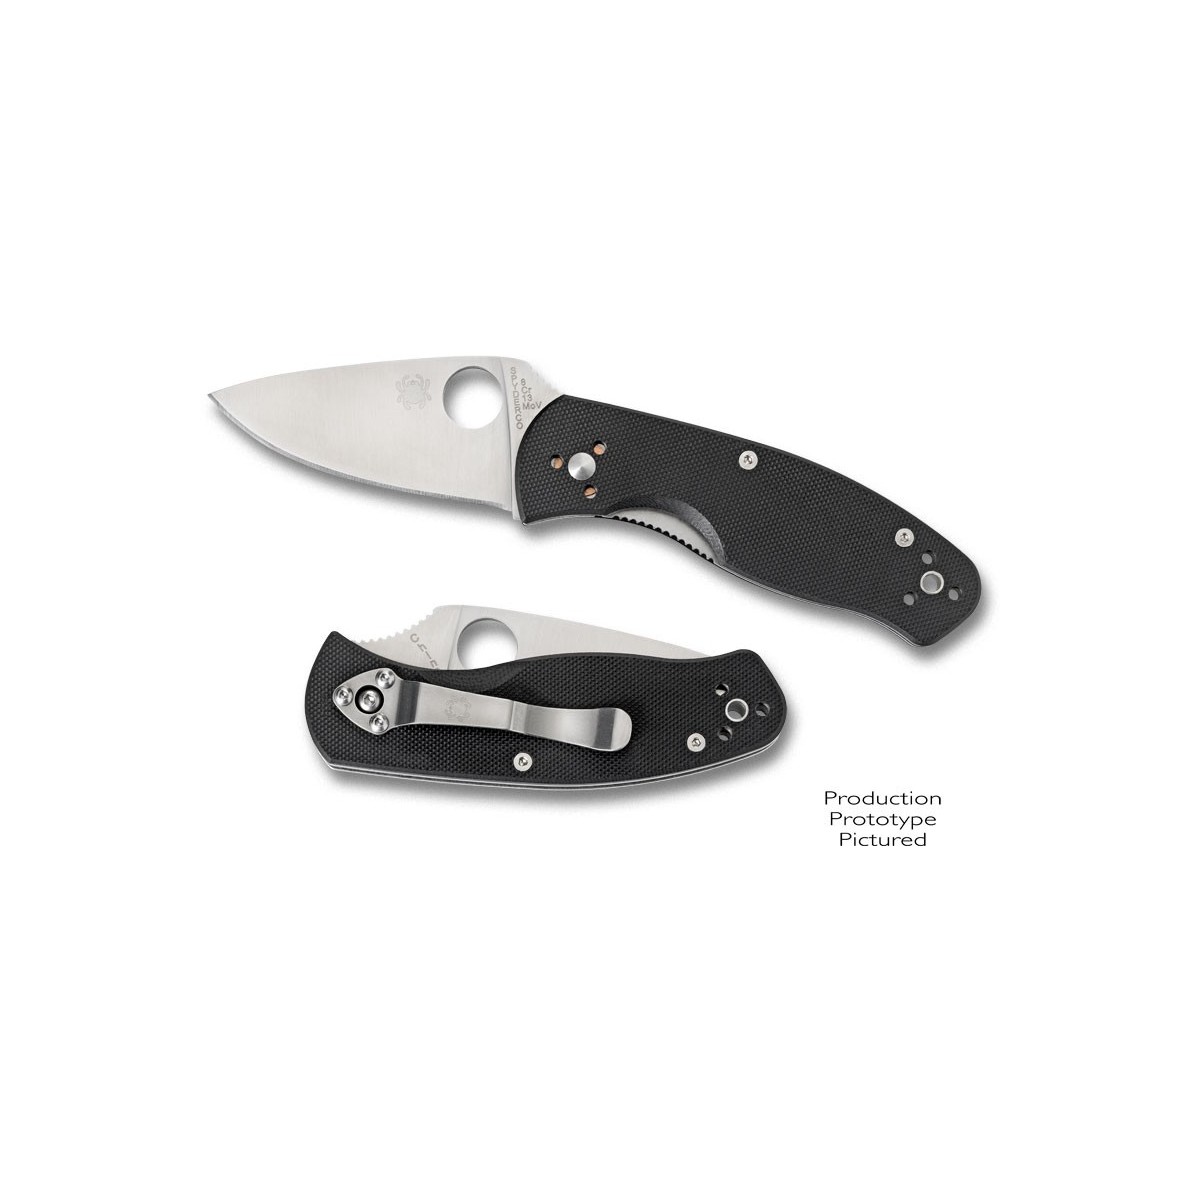 Spyderco Persistence Folding Knife 2-3/4" Plain Edge Blade, G10 Handles